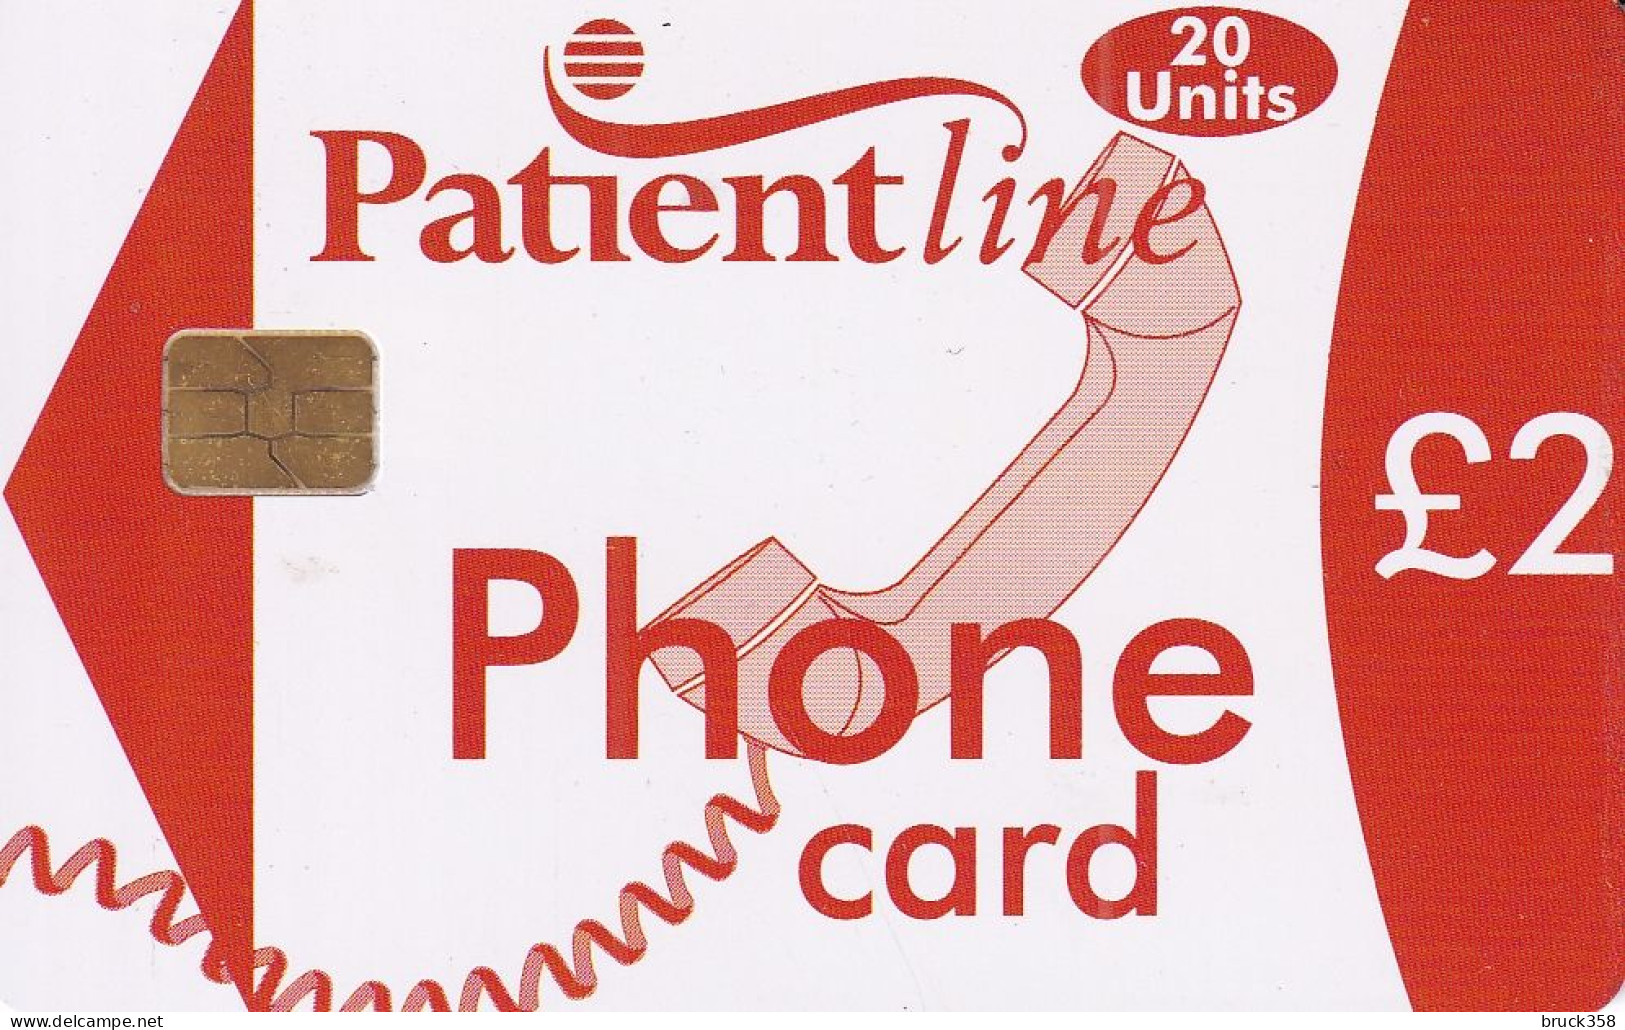 GROSSBRITANNIEN - BT Phonecard Plus